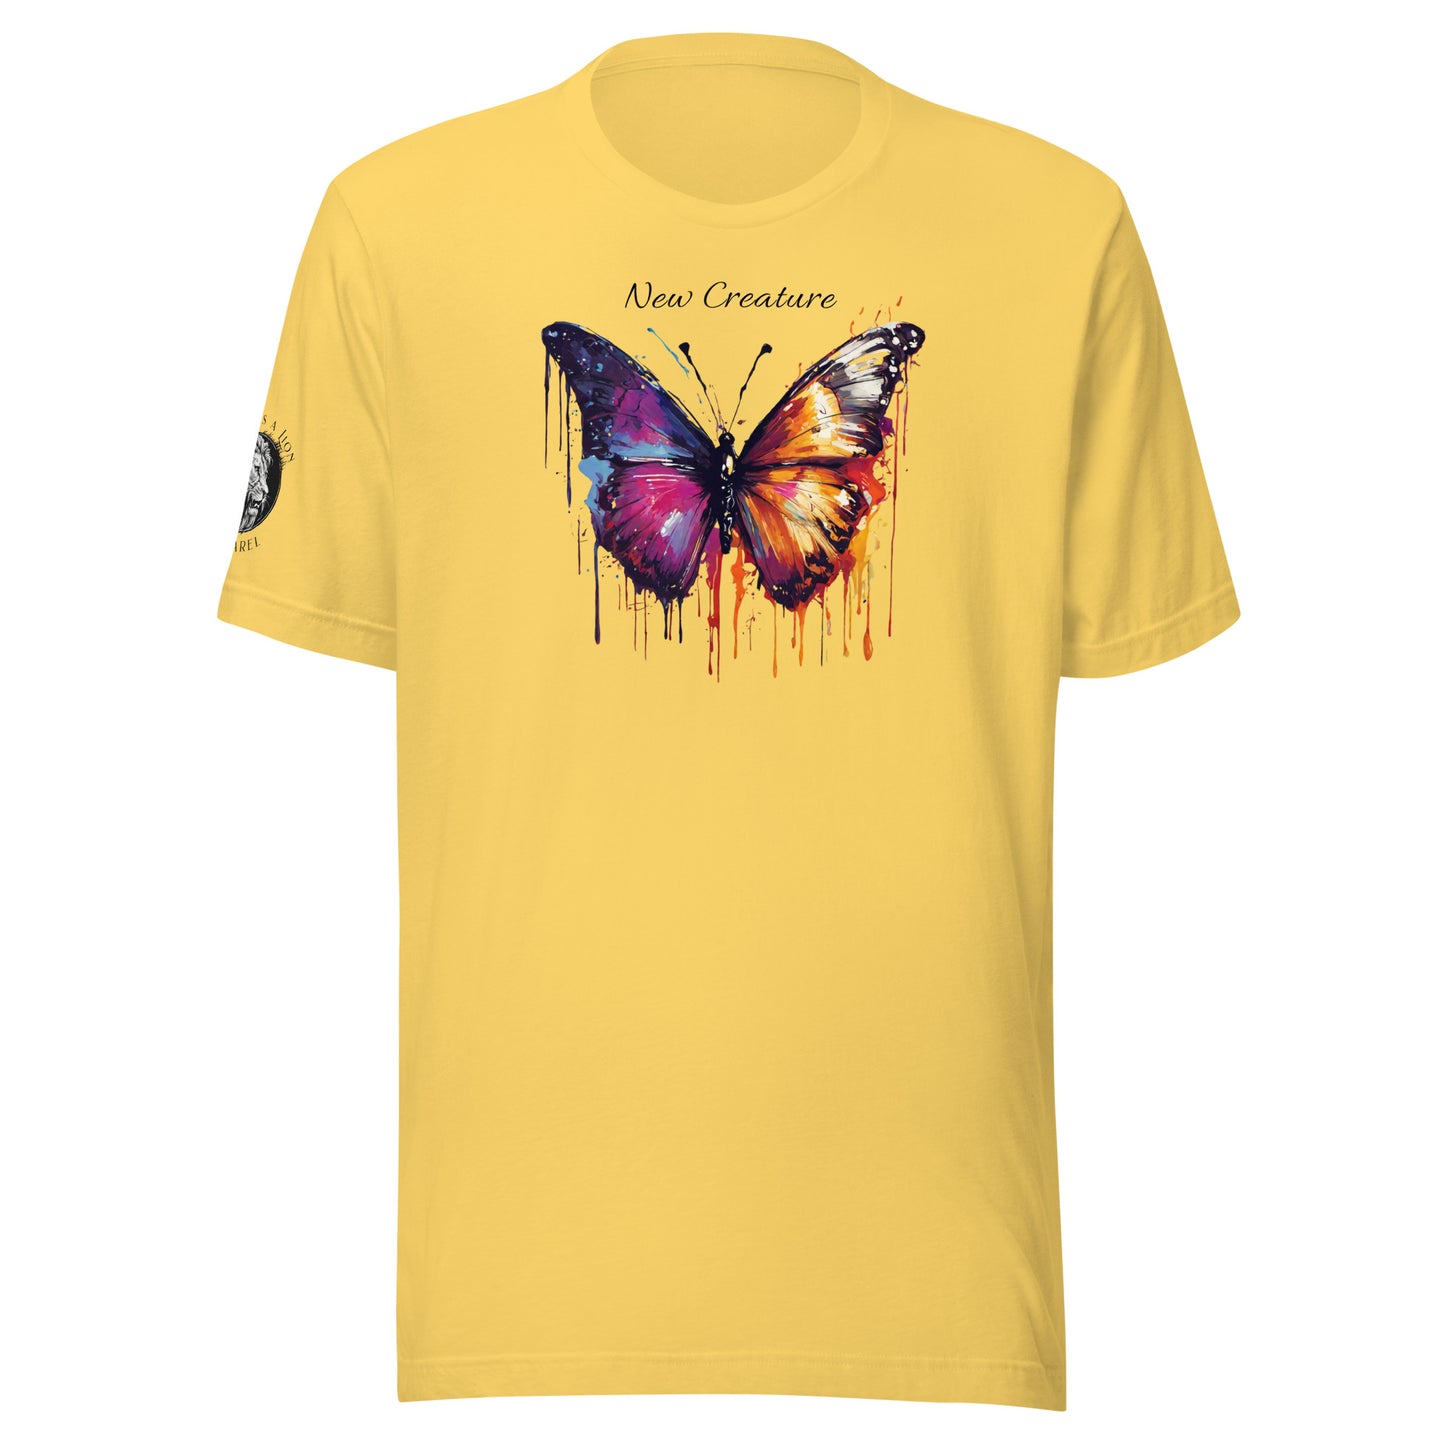 New Creature Christian Women's Beautiful Graphic Classic T-Shirt Yellow